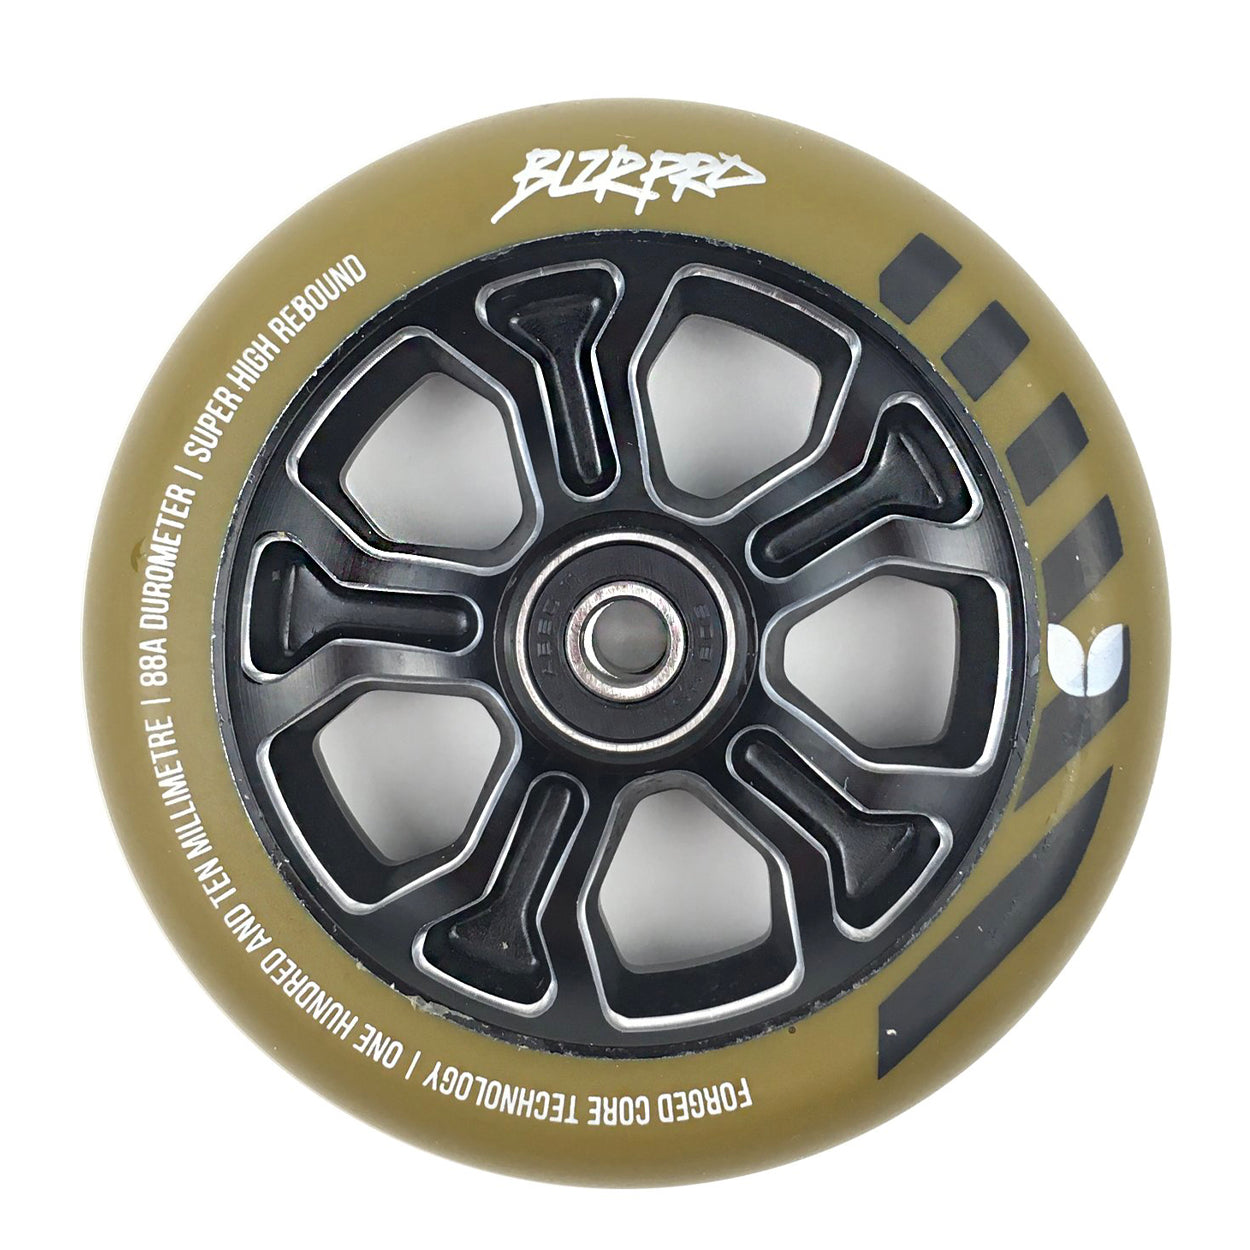 Blazer Pro Rebellion Forged Scooter Wheel 110 mm - Gum / Black - Prime Delux Store